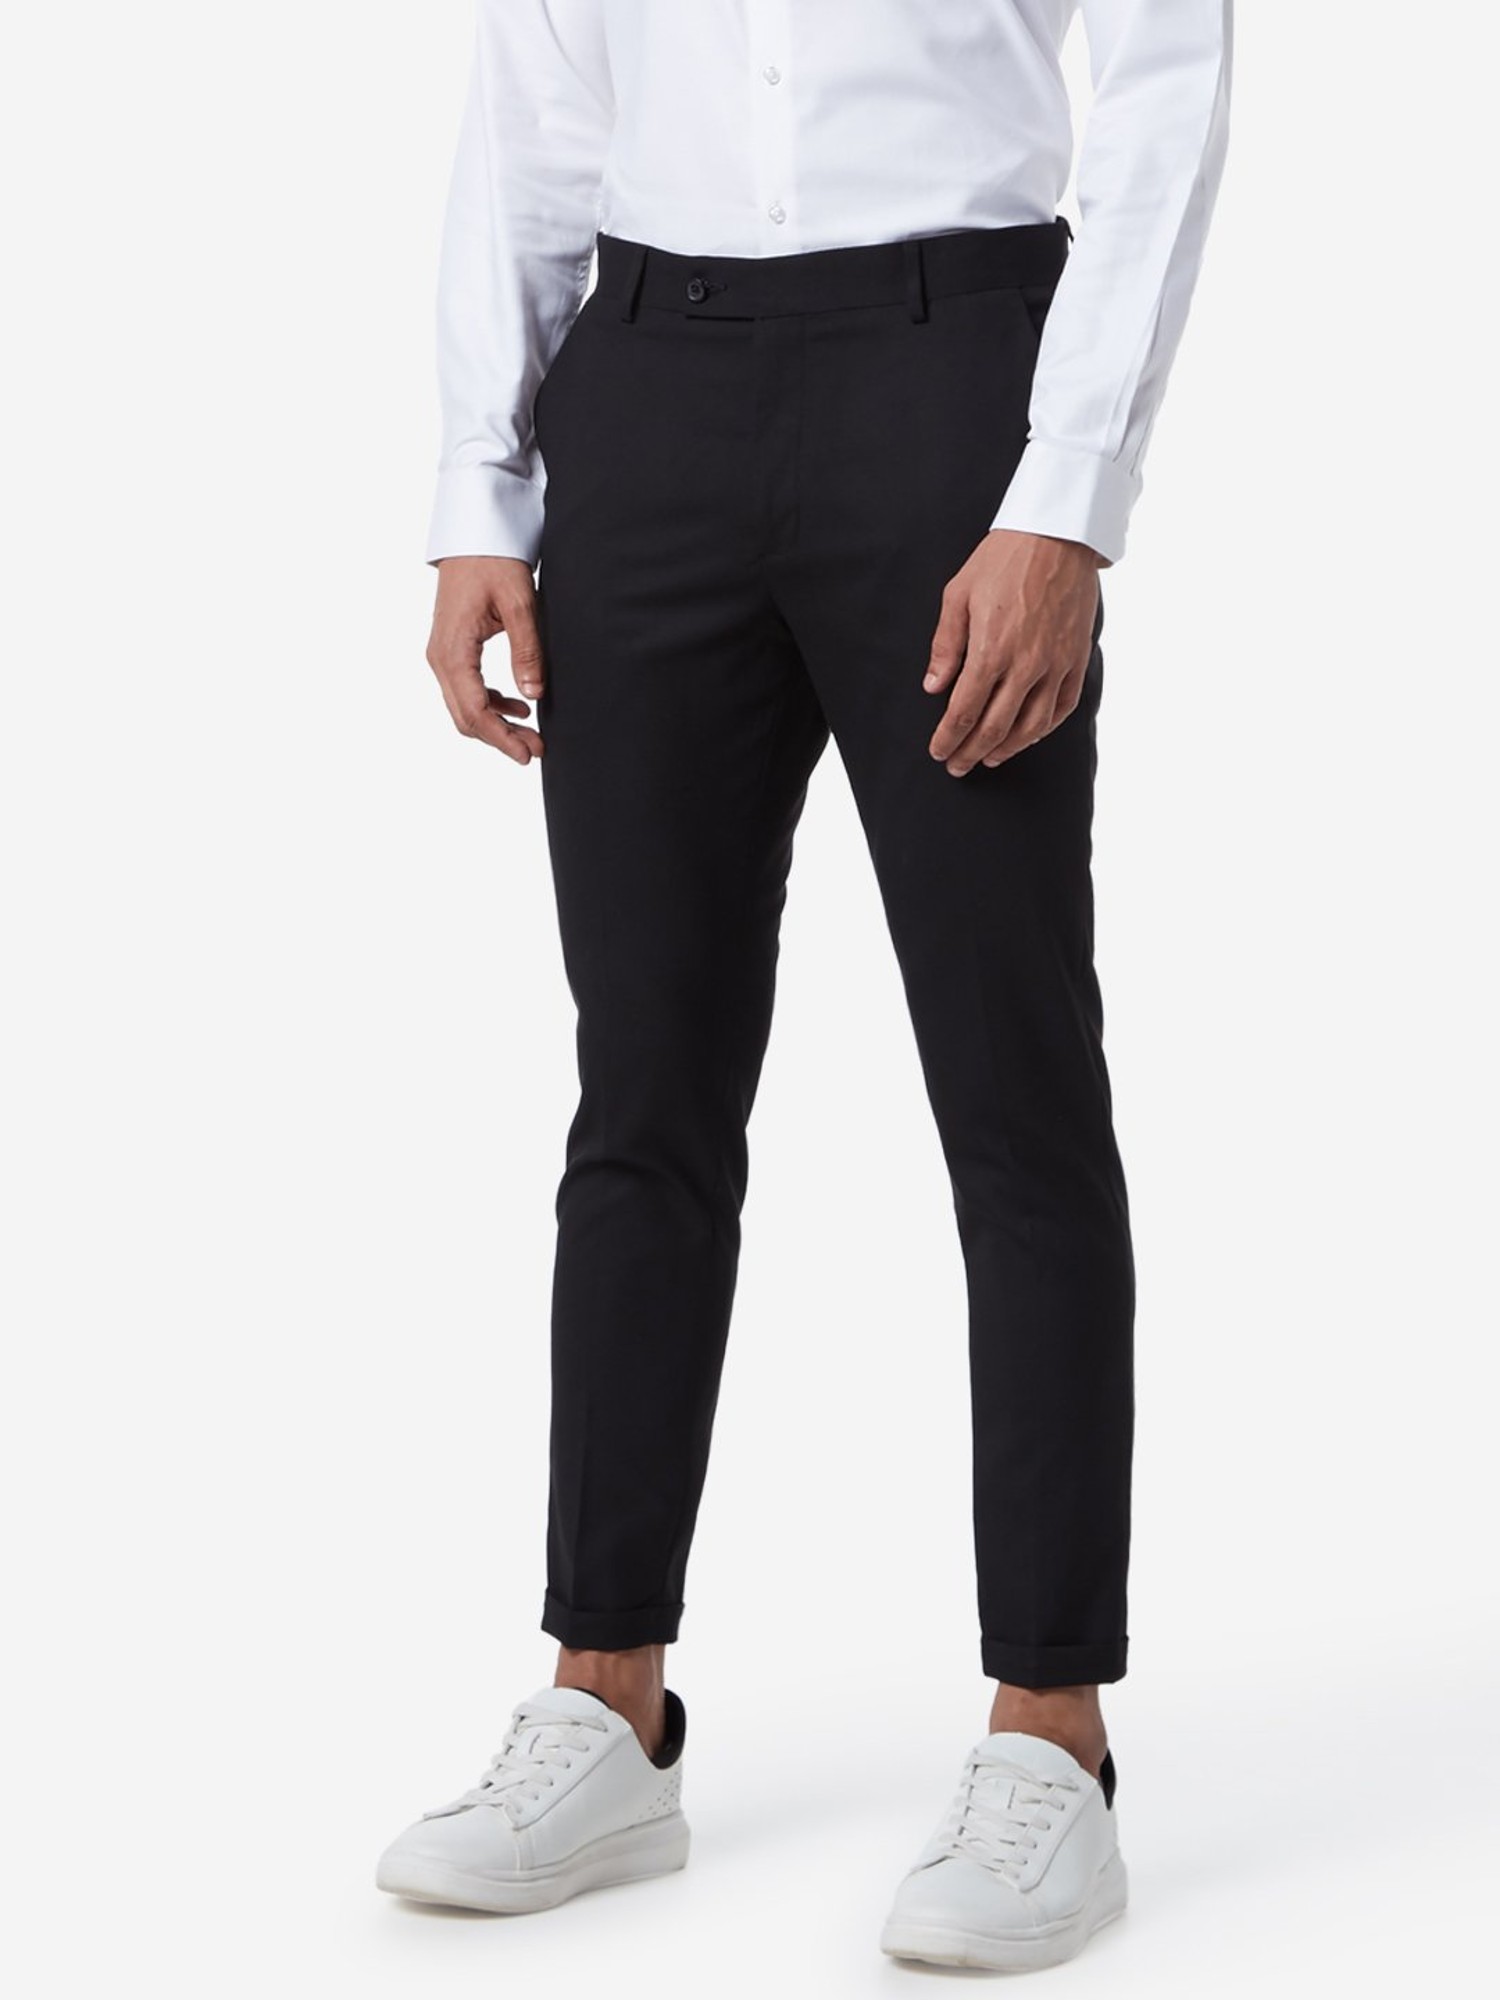 Shop Nuon Black Carrot-Fit Jogger-Style Jeans Online – Westside